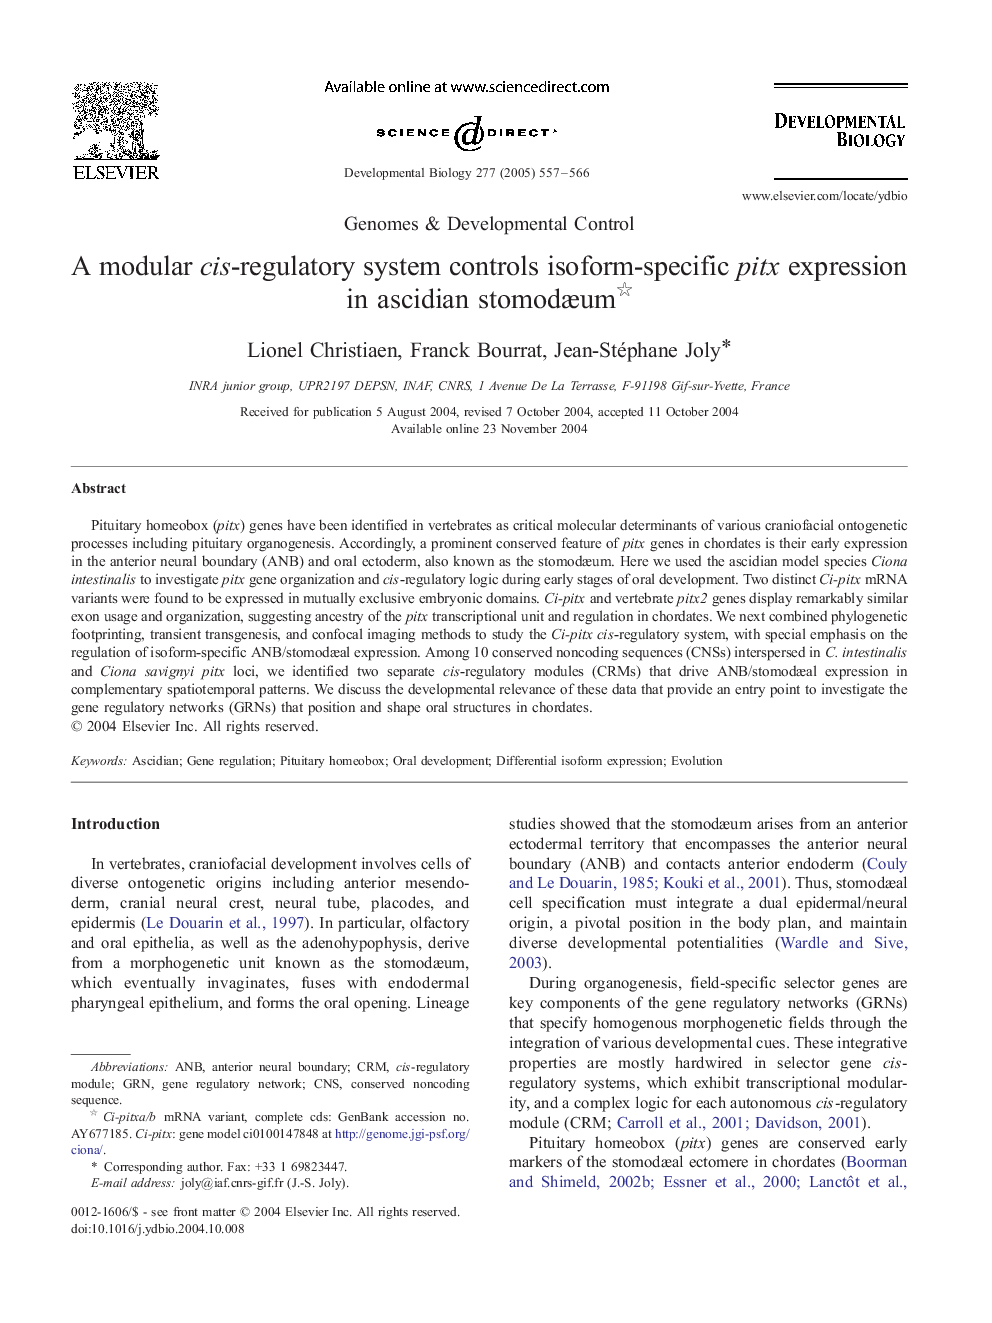 A modular cis-regulatory system controls isoform-specific pitx expression in ascidian stomodÃ¦um